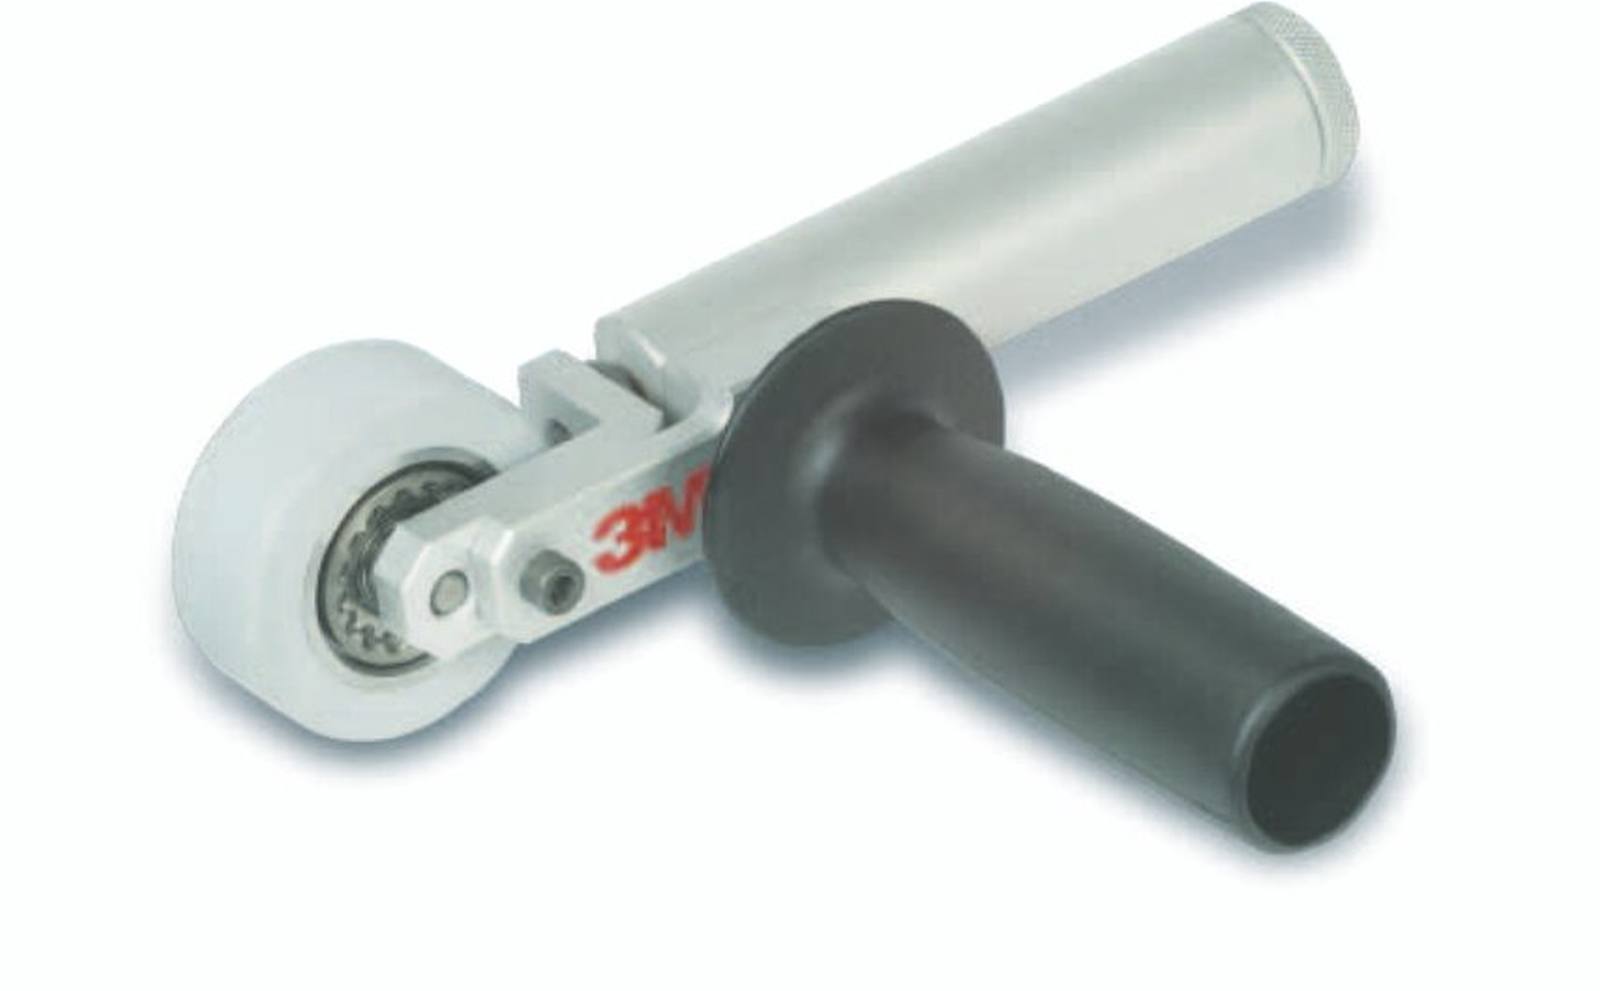 3M MR 1 pressure roller, width roller 22mm, diameter roller 50mm, MR1 basic setting pressure 50N